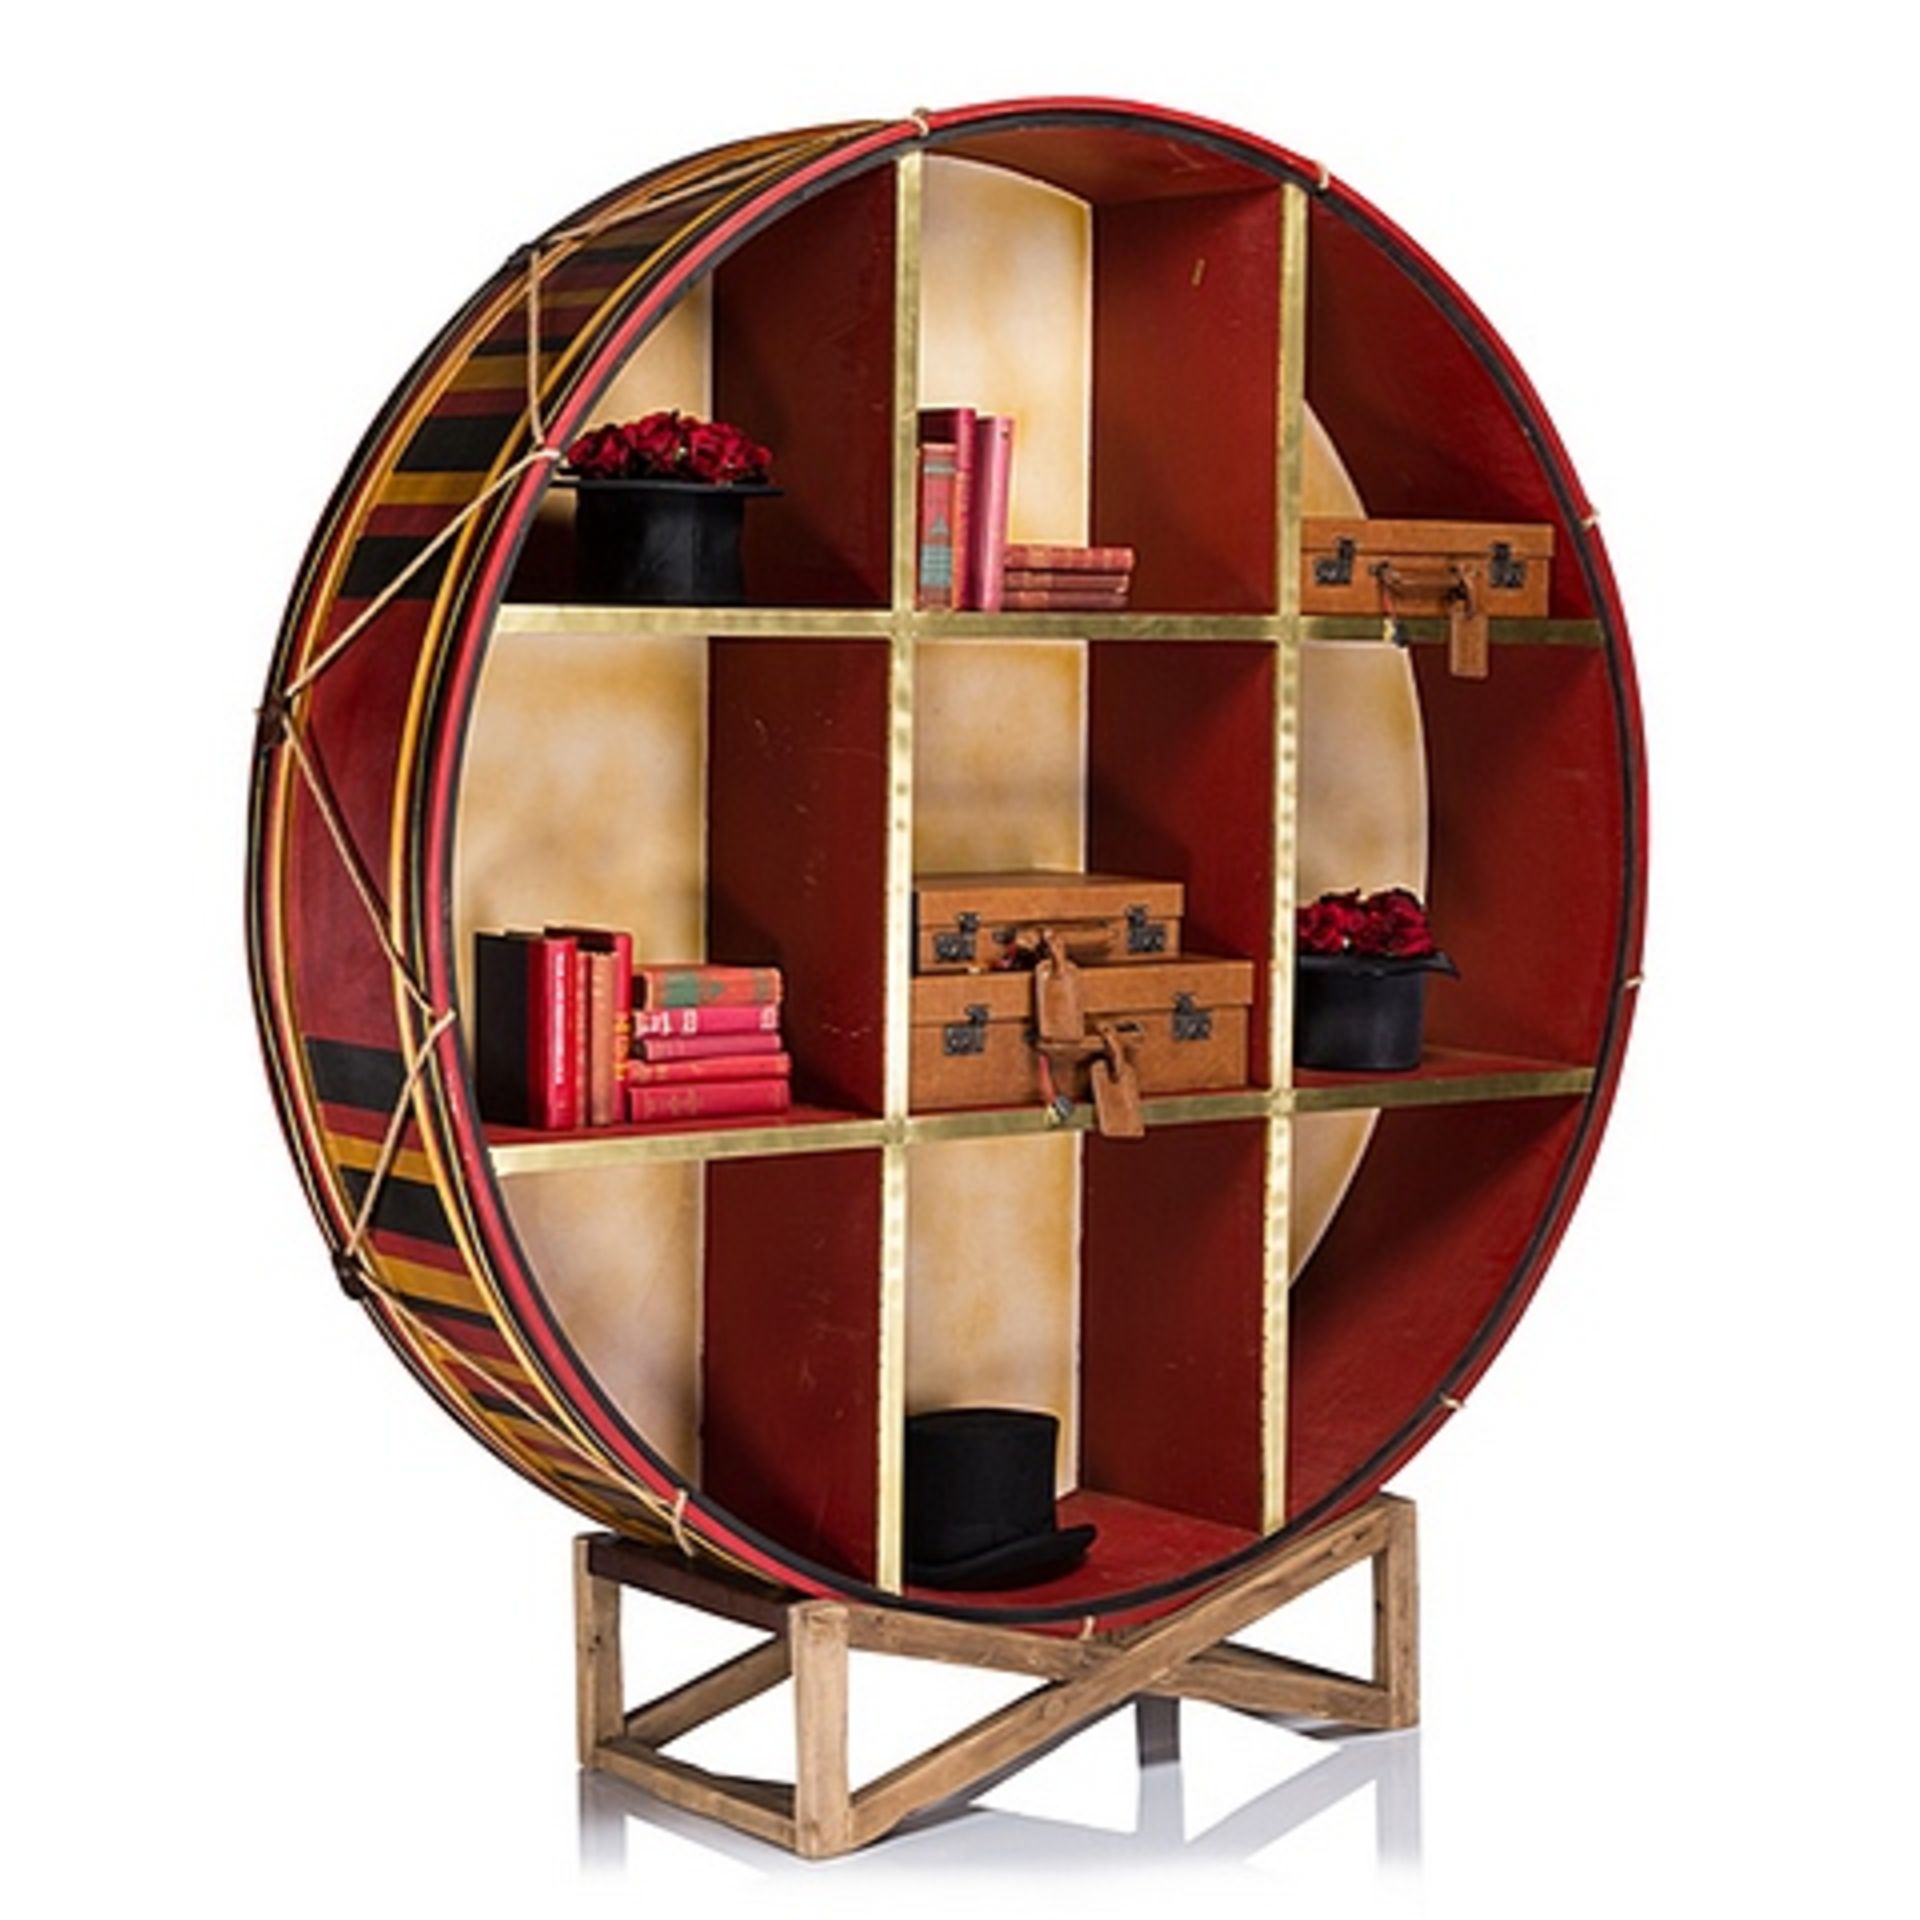 Drum Bookcase Display 60 X 63 X 60cm The Designers Regiment Collection Draws Inspiration